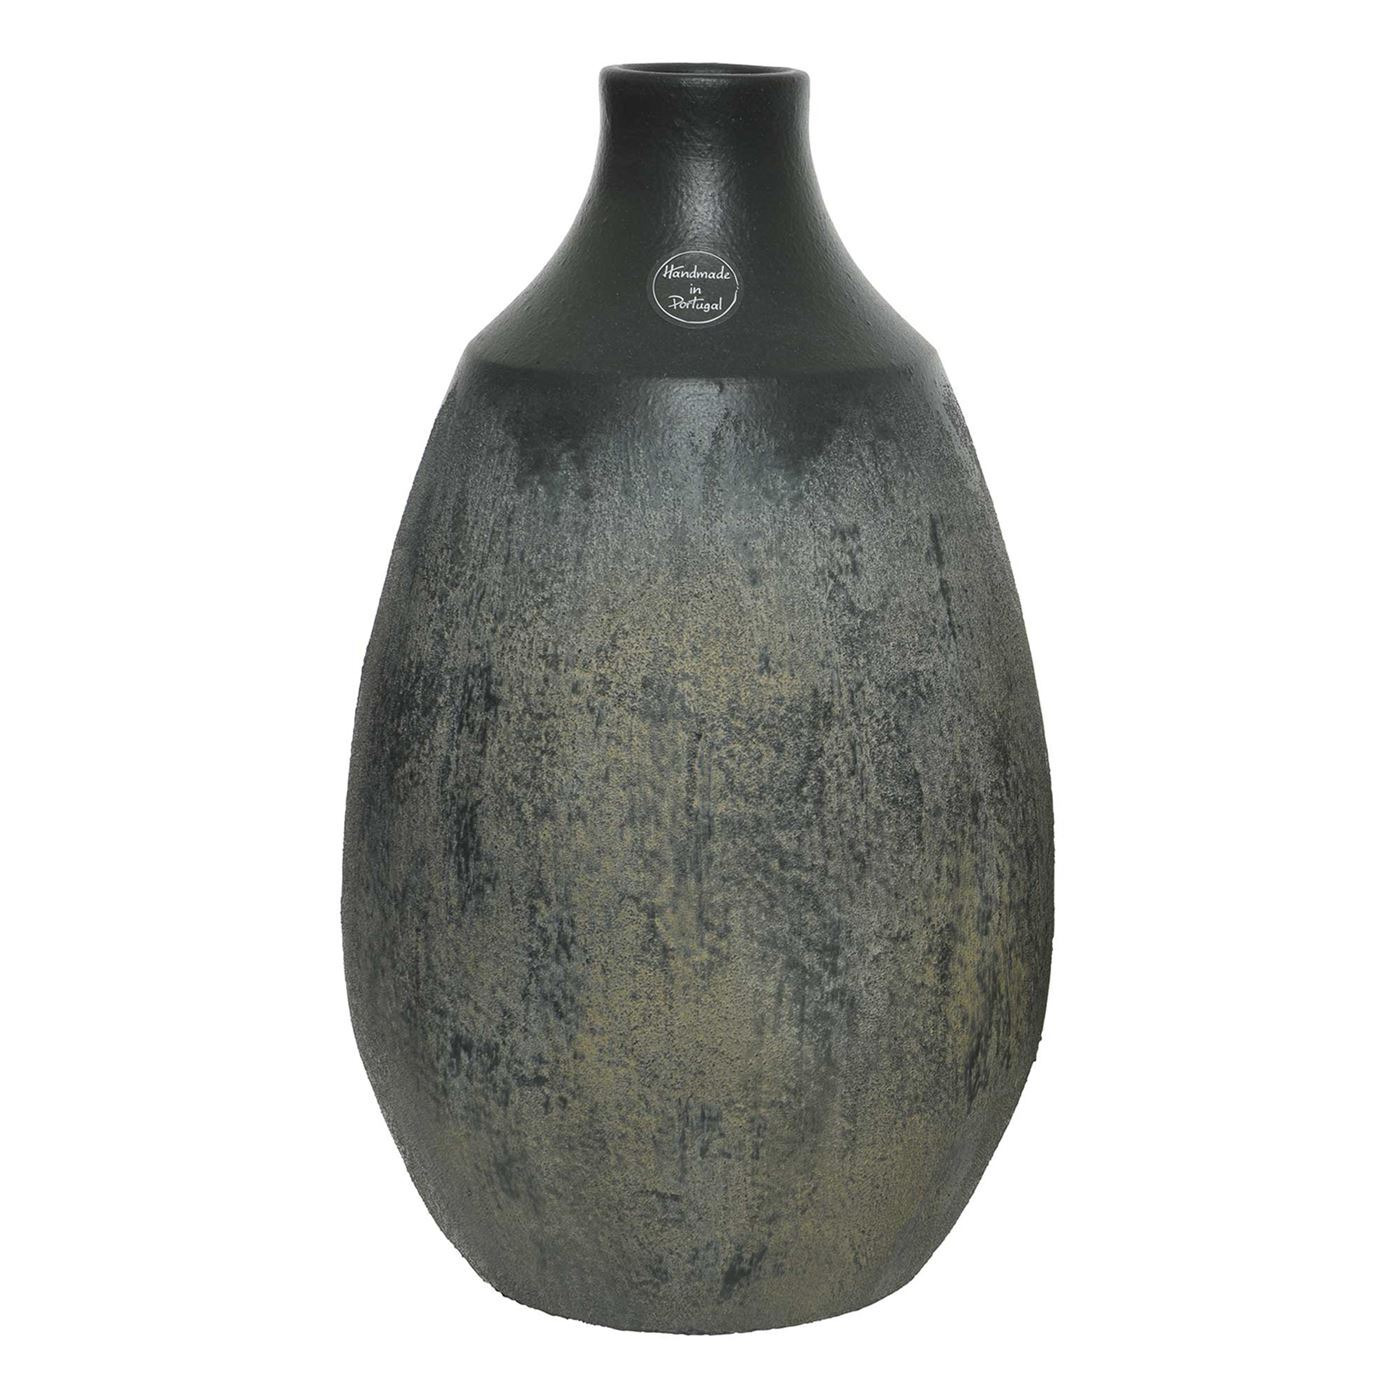 Black Rustic Vase Ceramic - Barker & Stonehouse - image 1